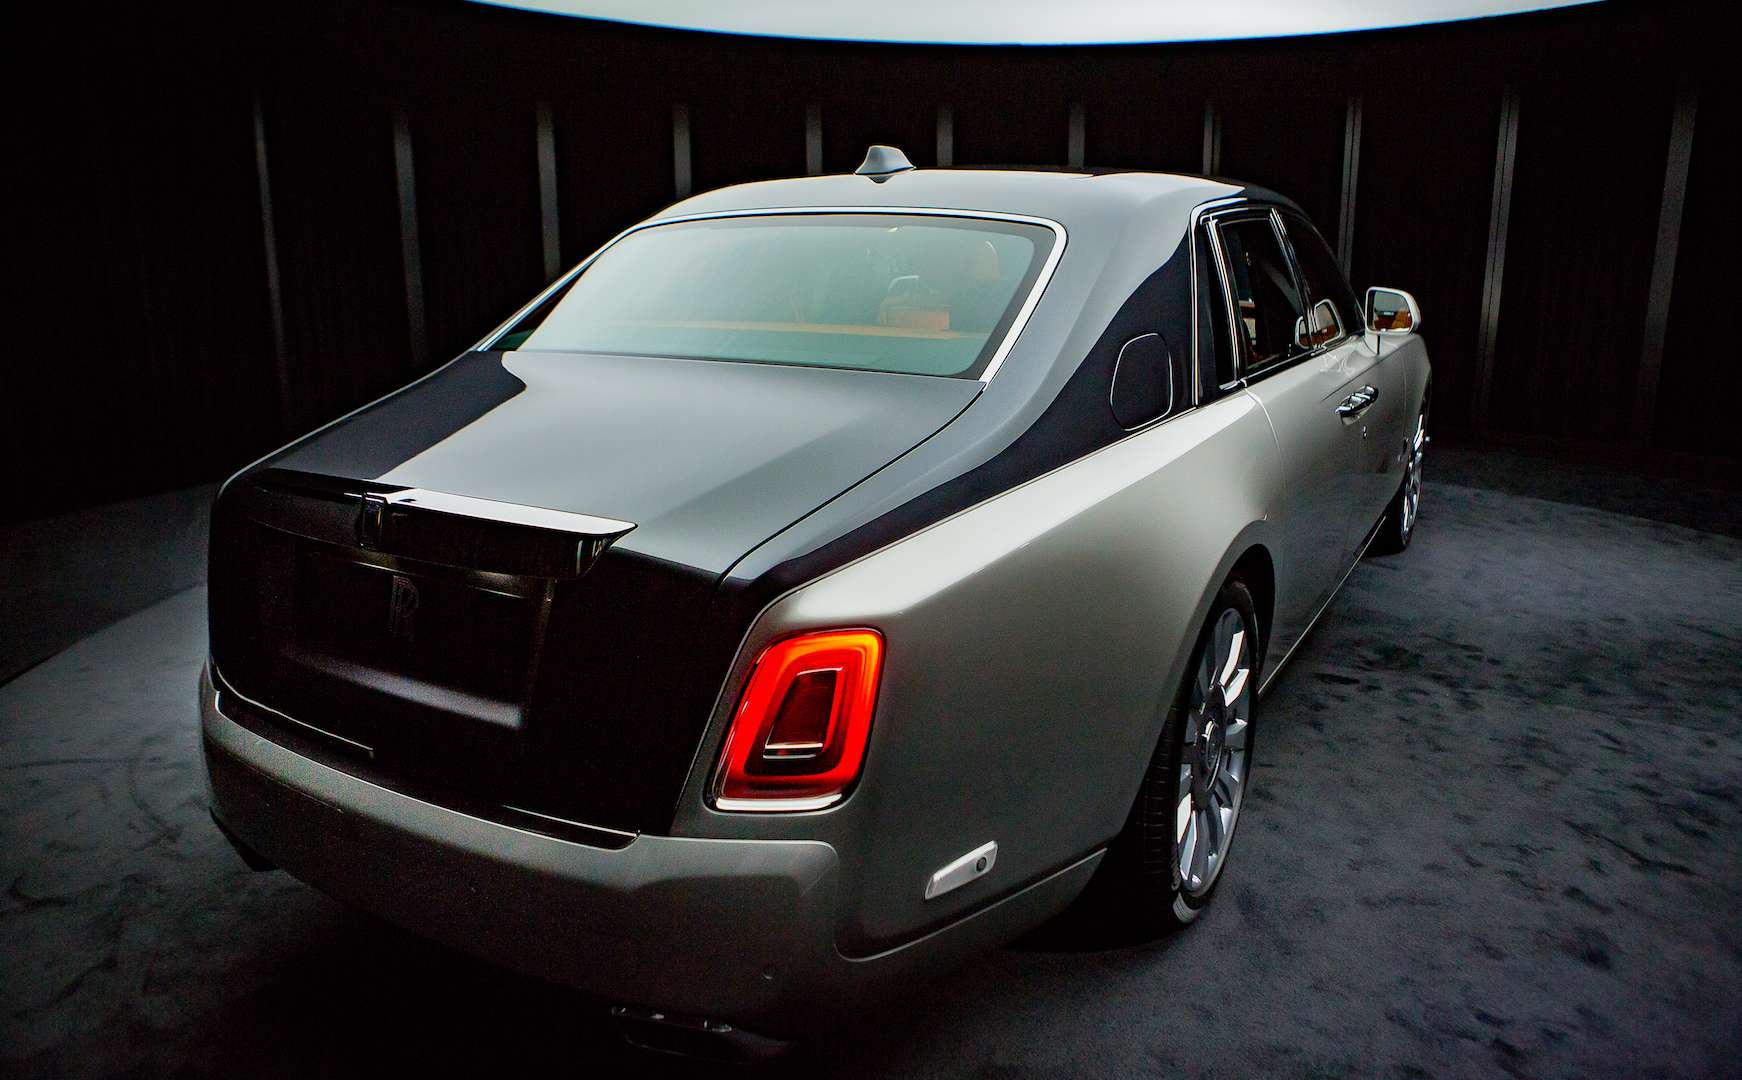 Rolls Royce Phantom Revealed: A $000 Car With A Built In